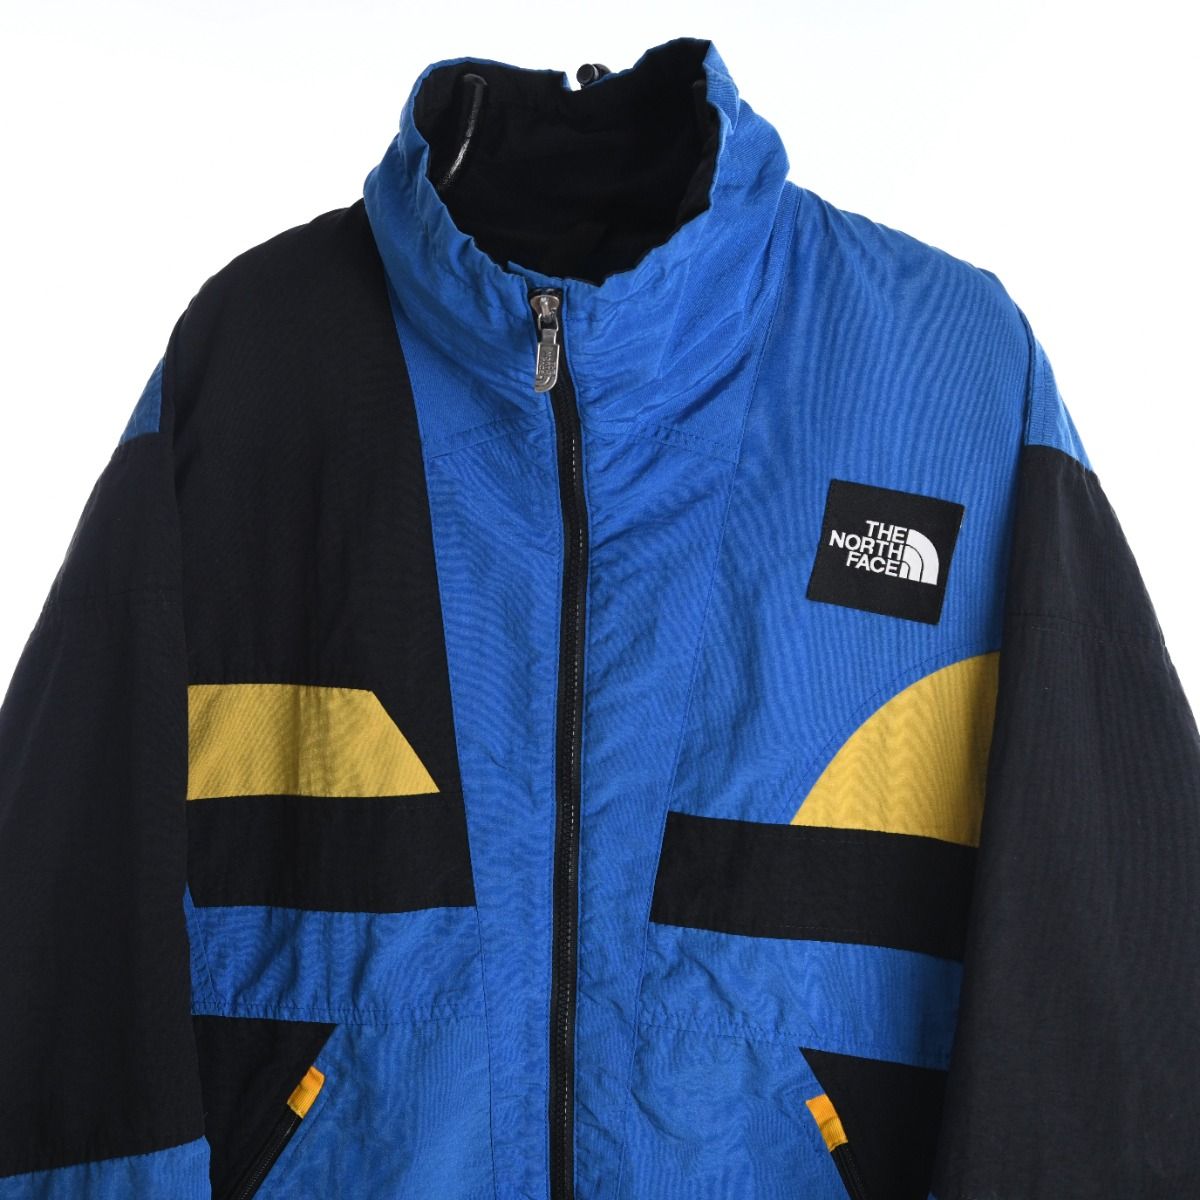 The North Face 1990s Tonar Jacket